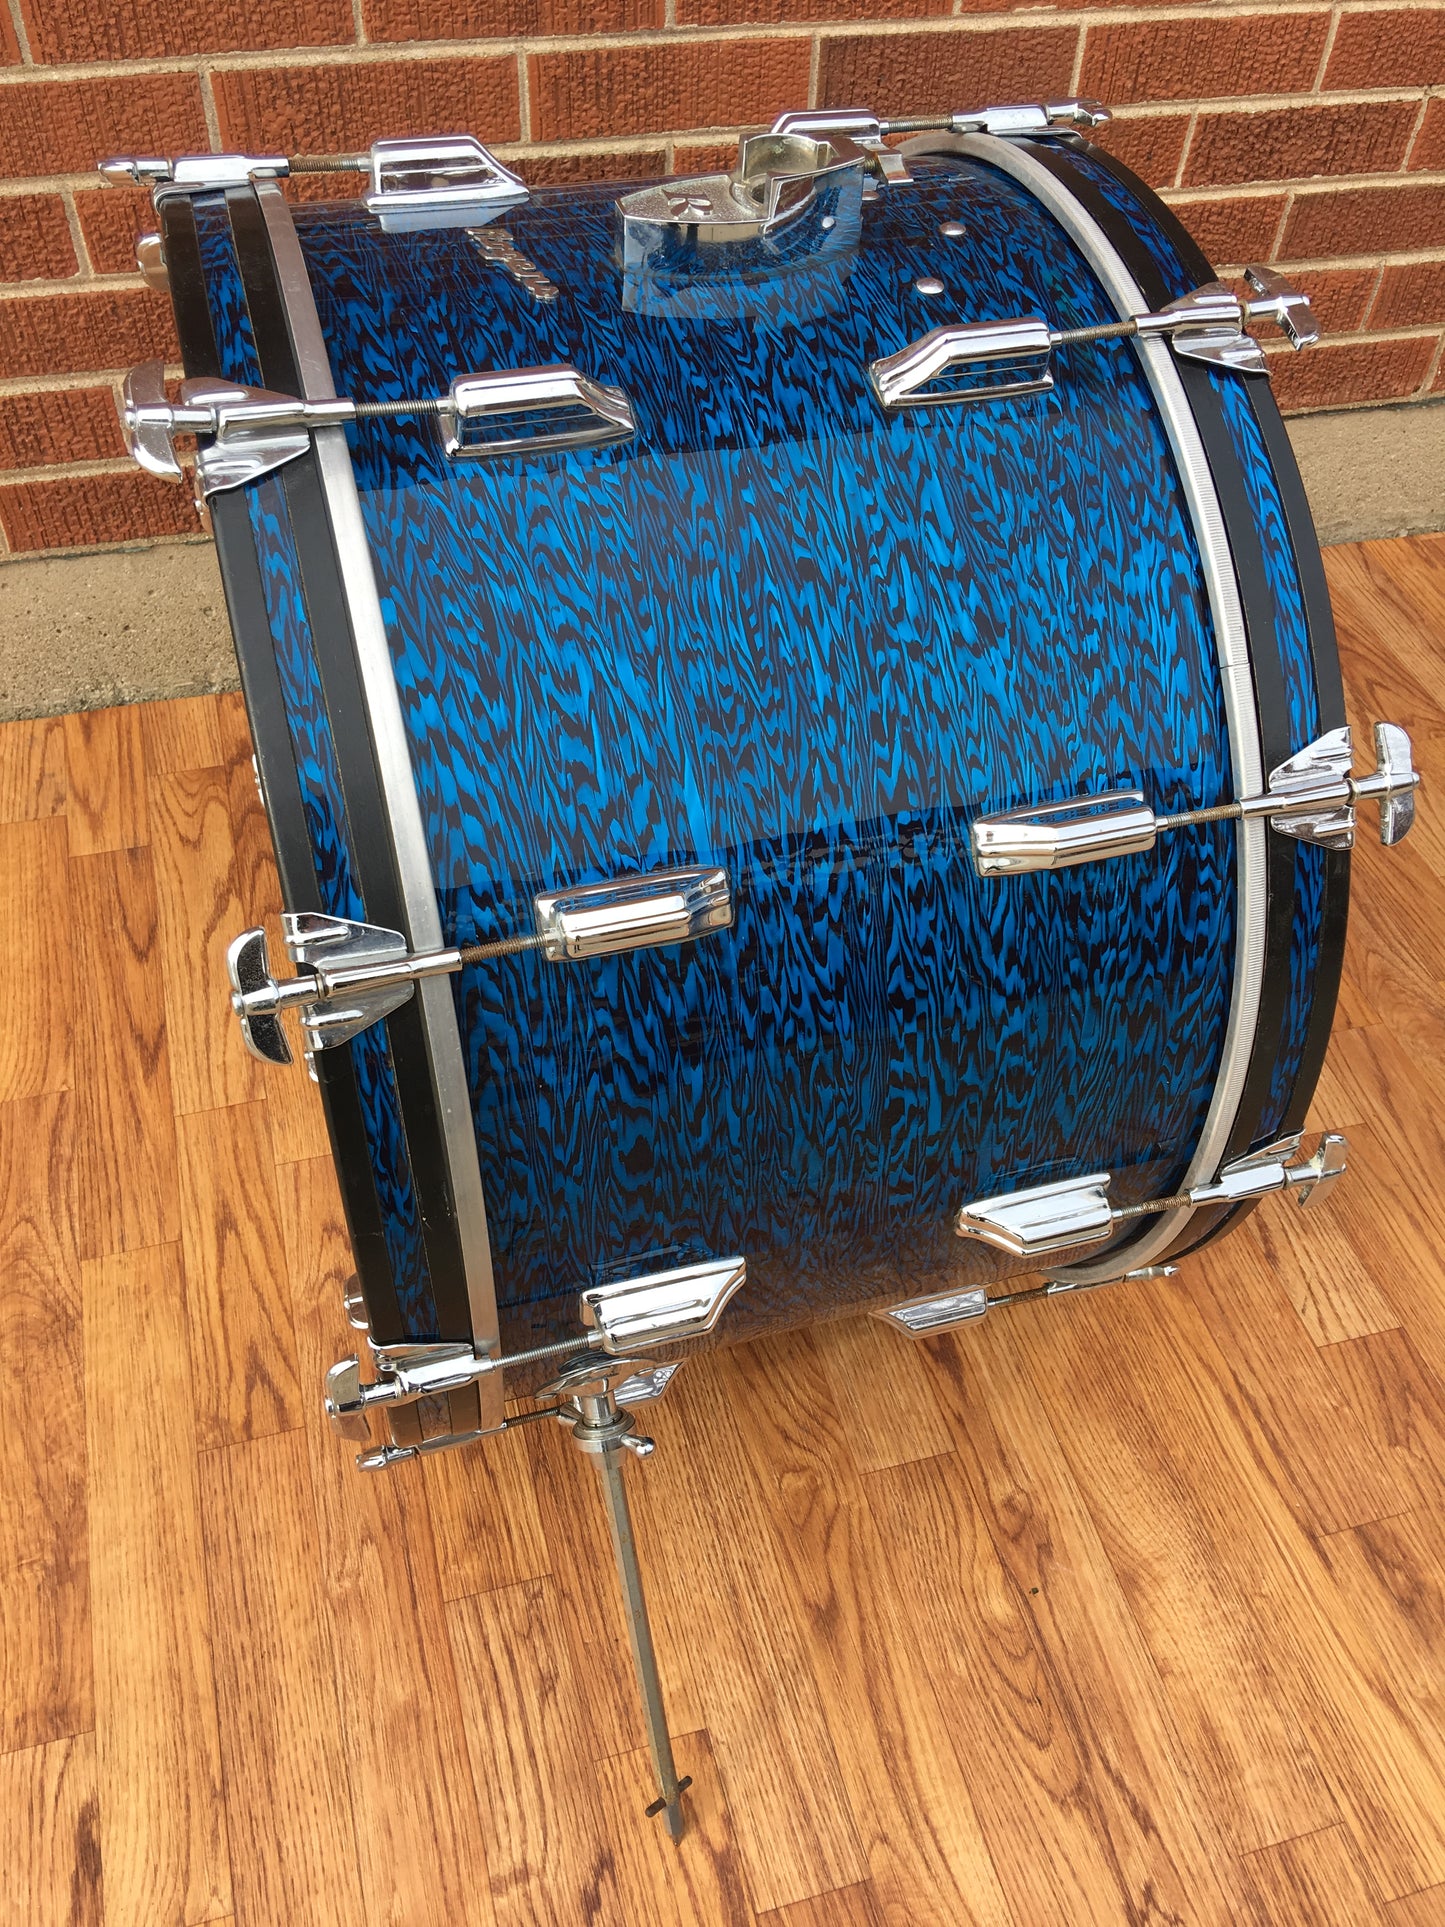 1960s Rogers 14"x24" Holiday Dayton Bass Drum - Blue Onyx